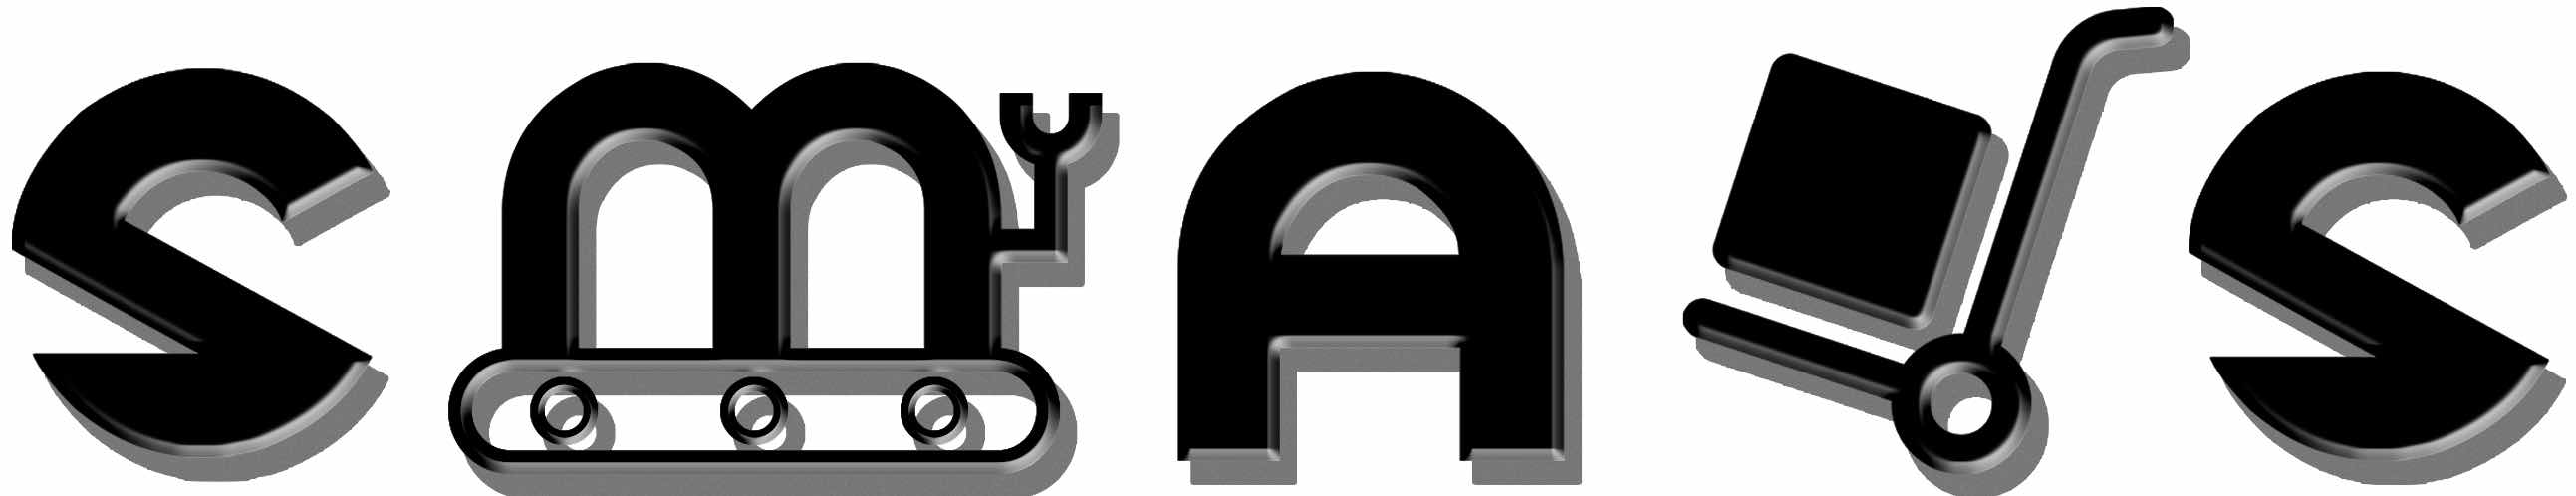 SMADS logo